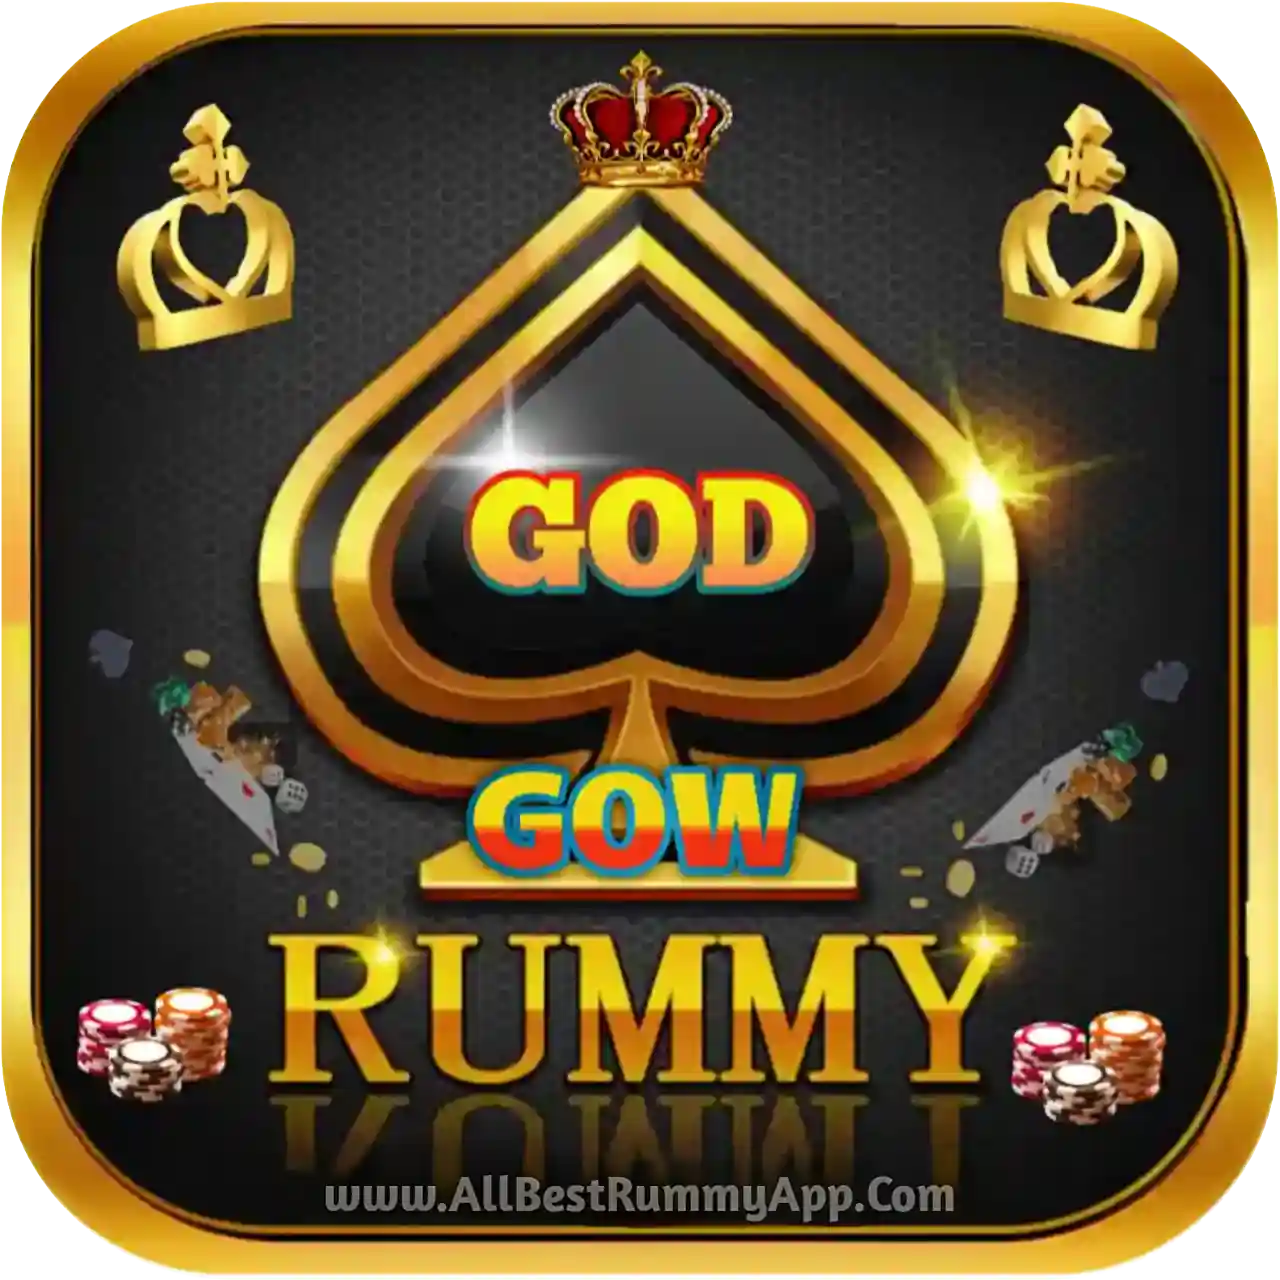 God Cow Rummy - All Best Rummy App